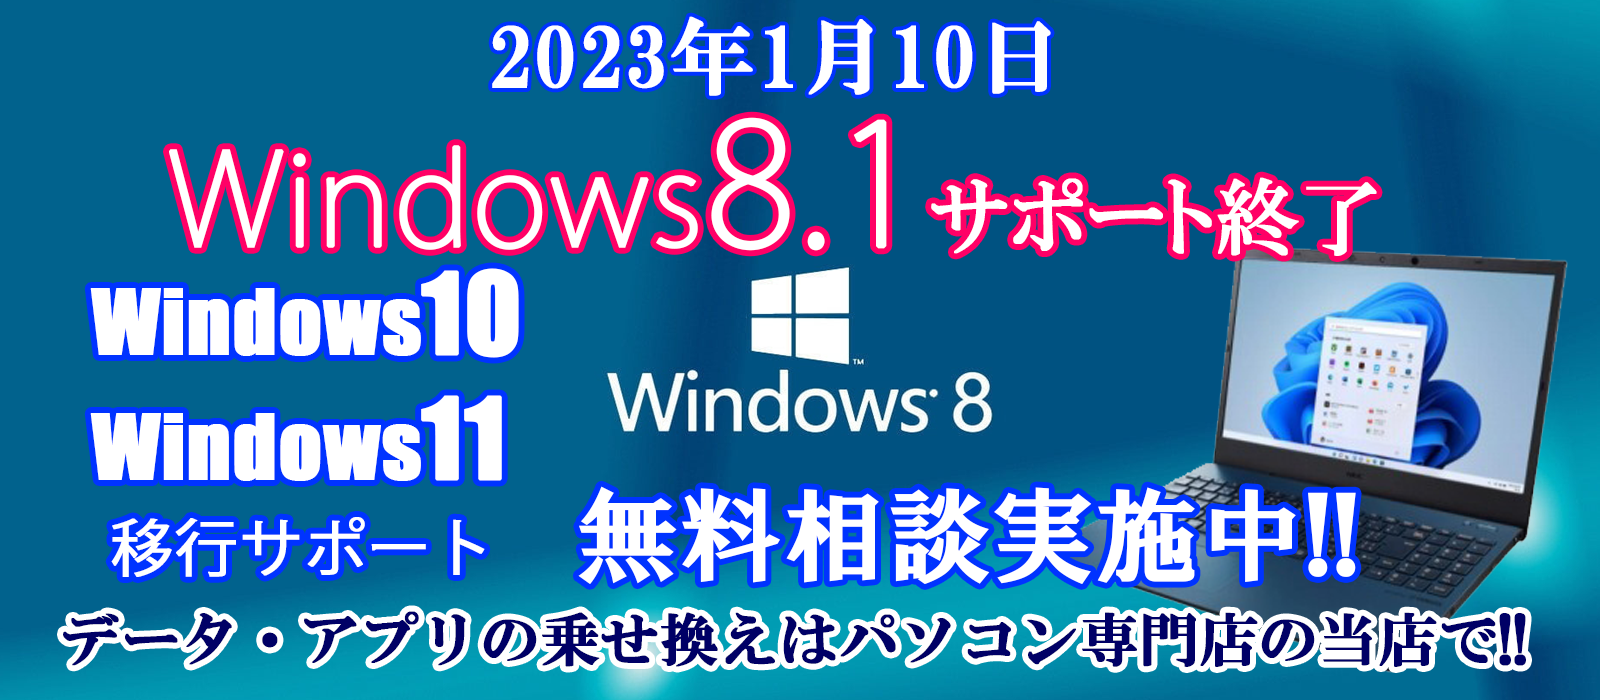 Windows7終了